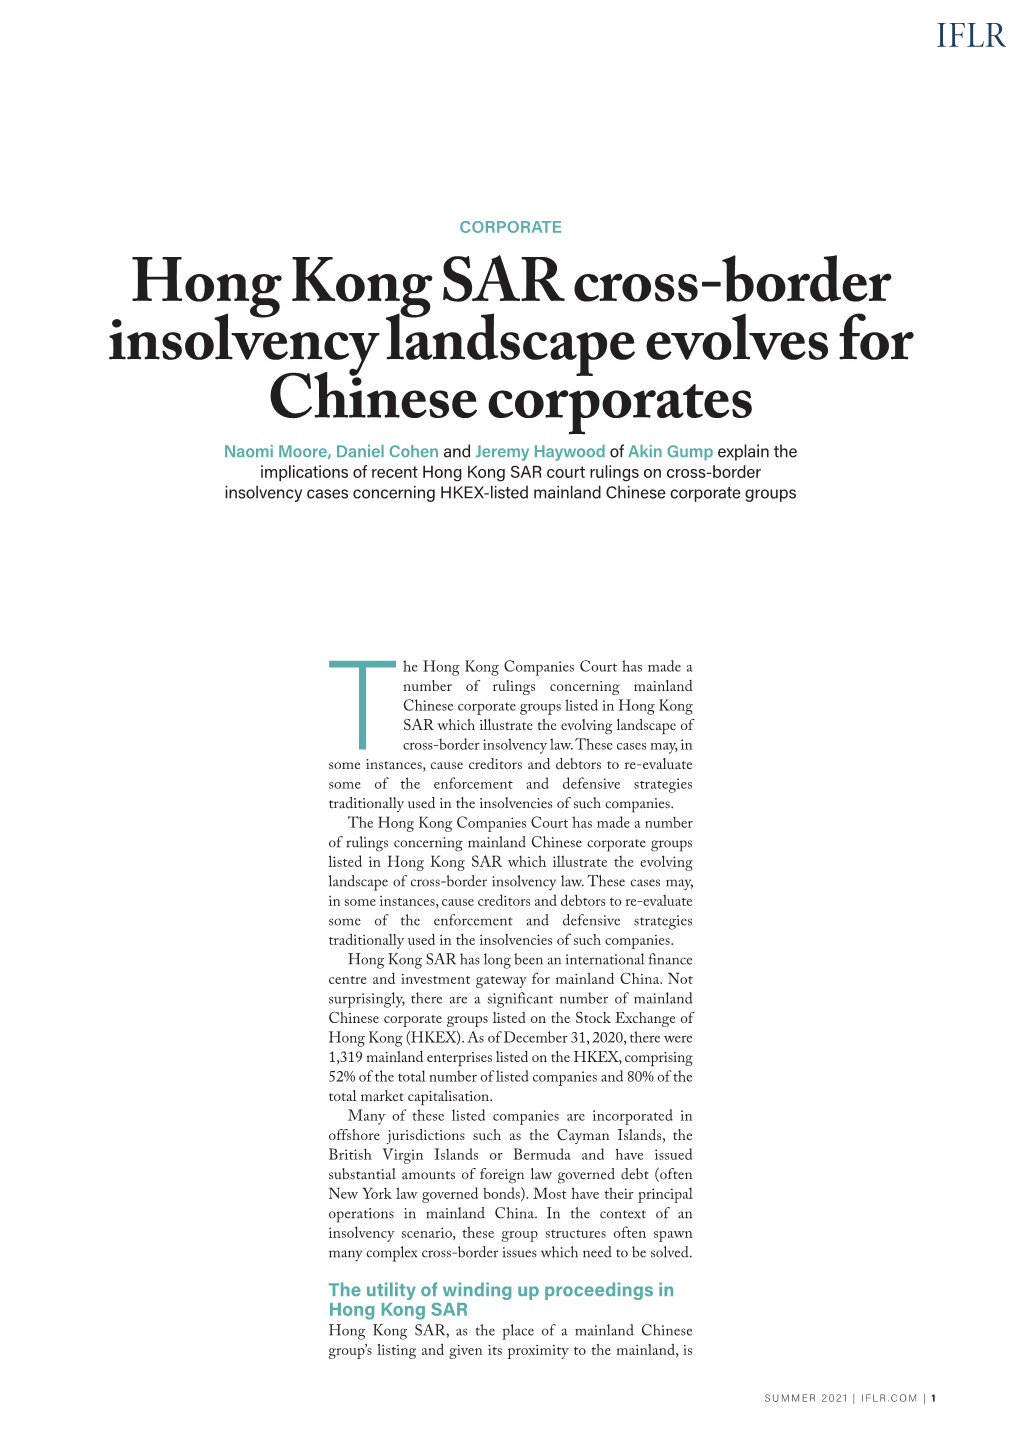 Hong Kong SAR Cross-Border Insolvency Landscape Evolves For